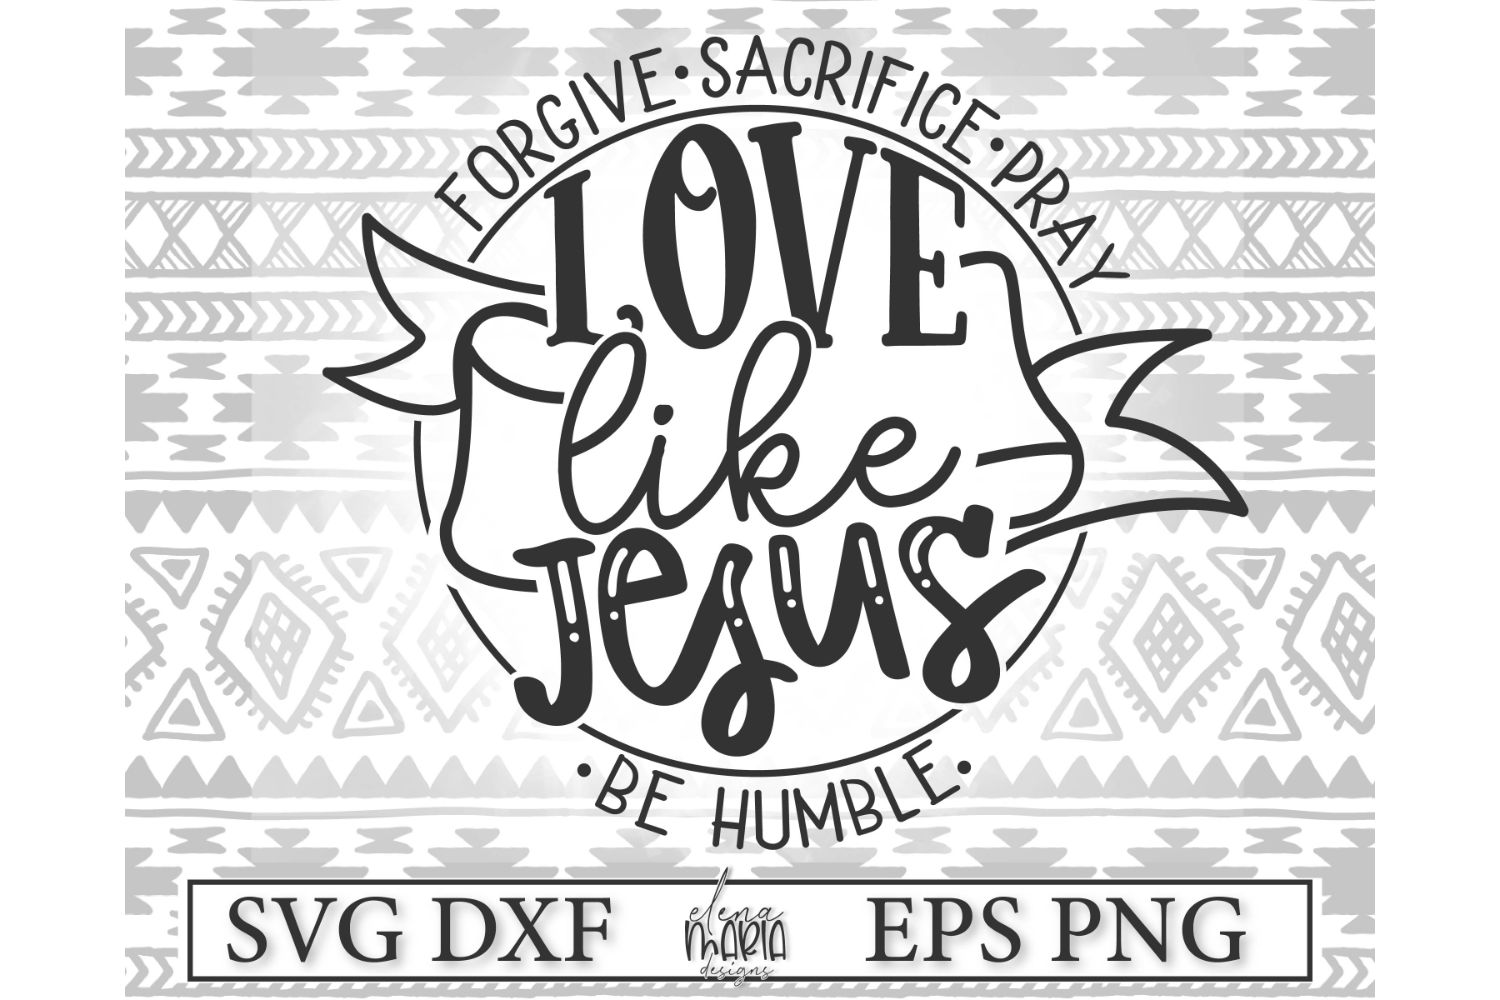 Download Love Like Jesus SVG Cutting File